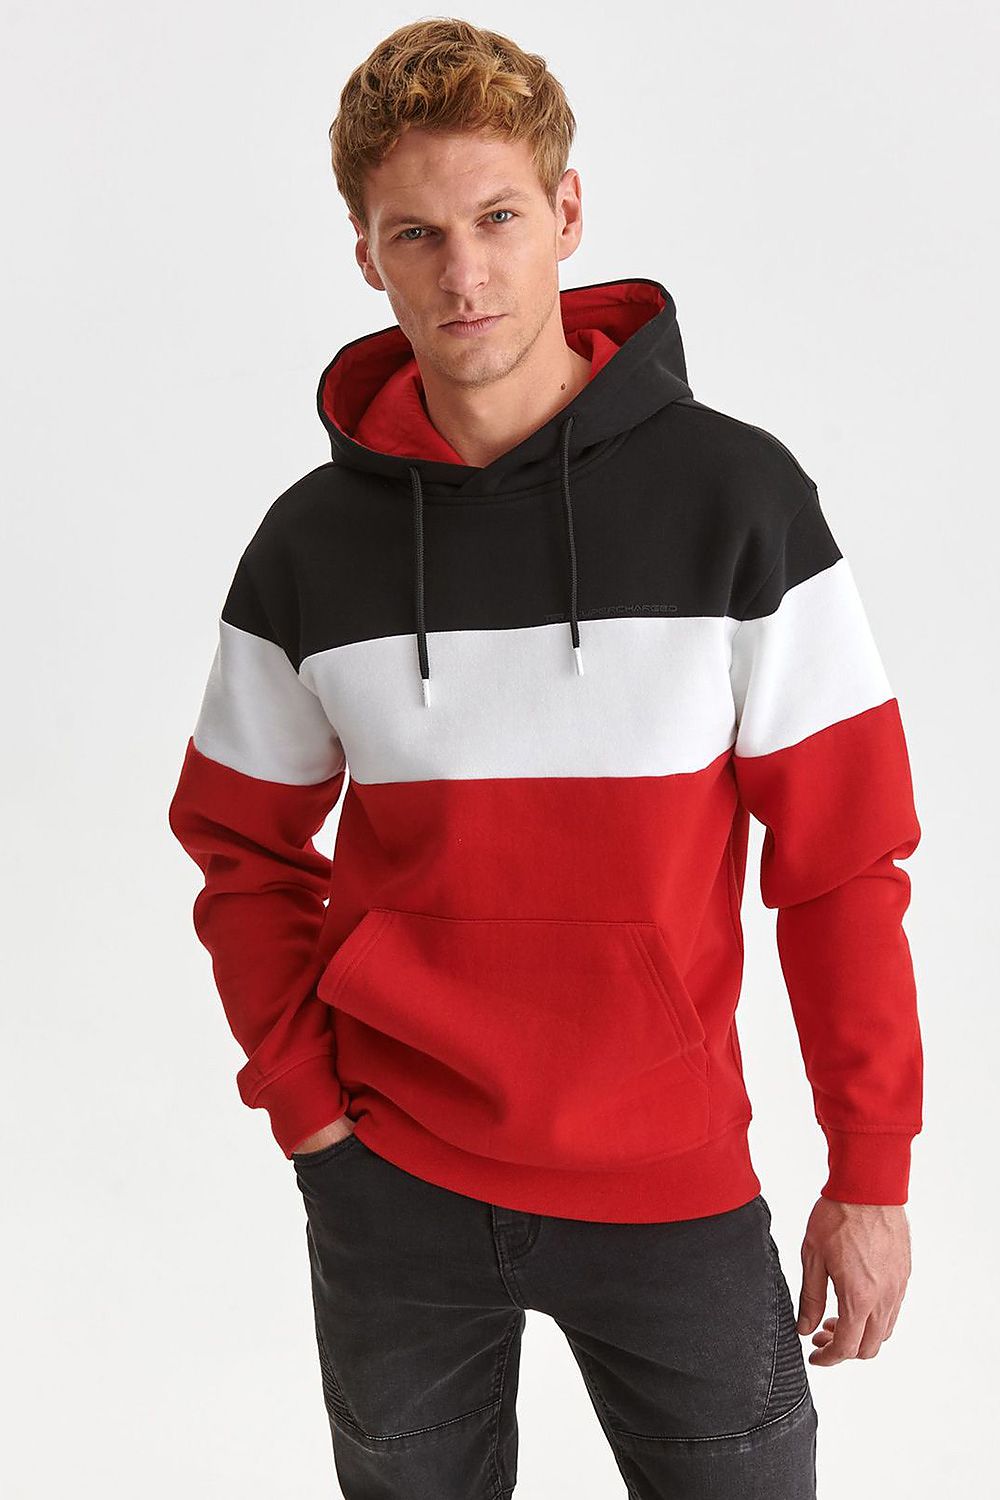 Sweatshirt model 174322 Top Secret Men`s Sweatshirts Wholesale Clothing ...